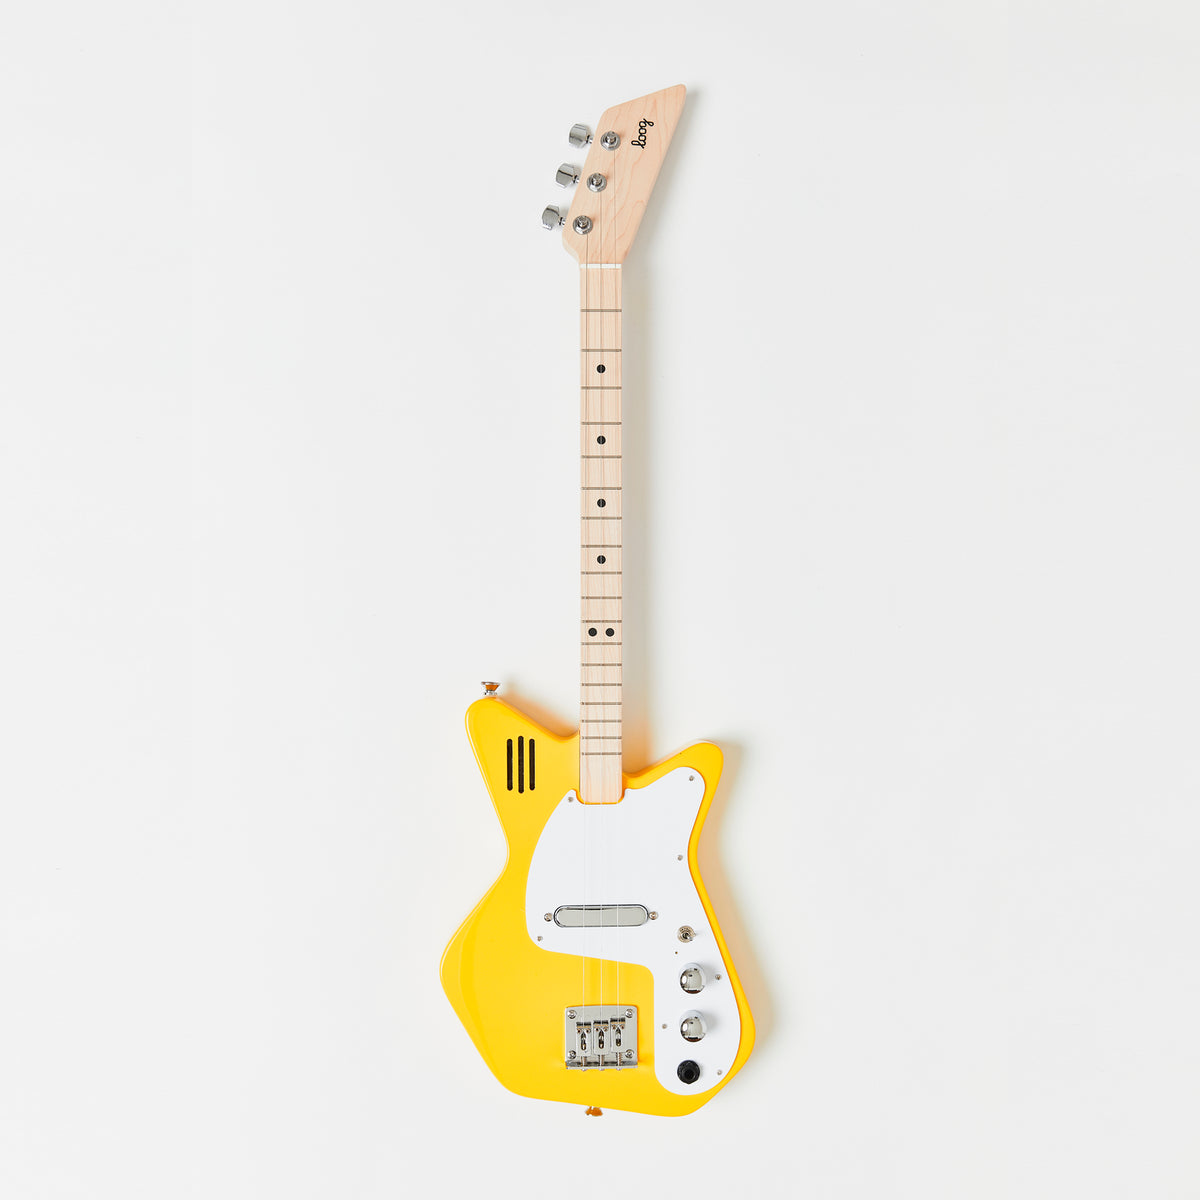 yellow-guitar-strap-gig-bag yellow-guitar-strap-wall-hanger yellow-guitar-strap-stand